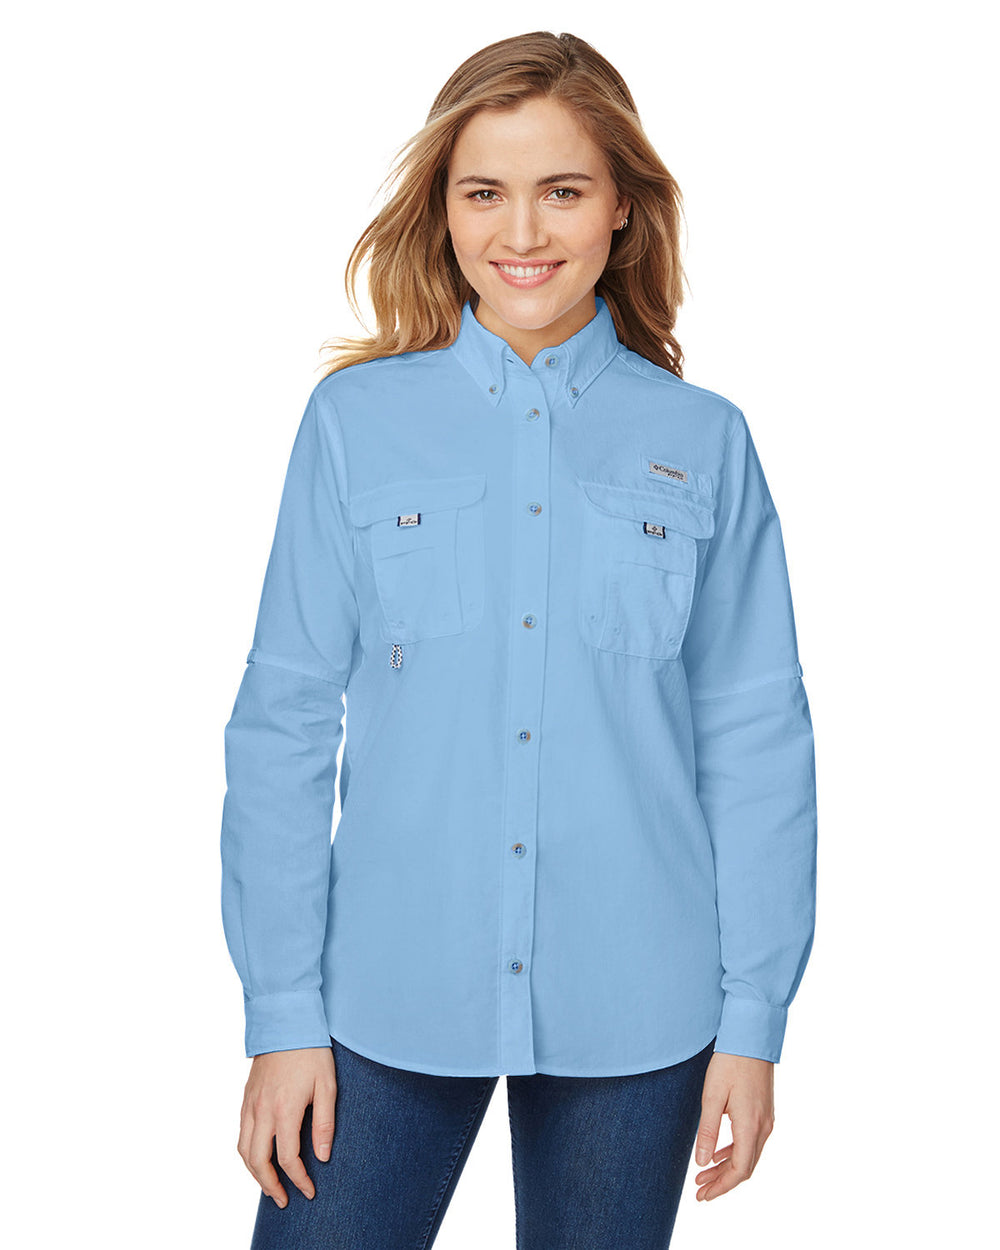 Columbia 7314 Ladies' Bahama Long-Sleeve Shirt